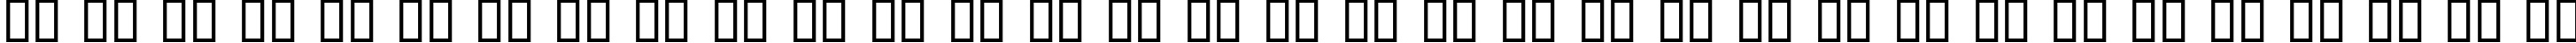 Пример написания русского алфавита шрифтом Lucida Handwriting Italic